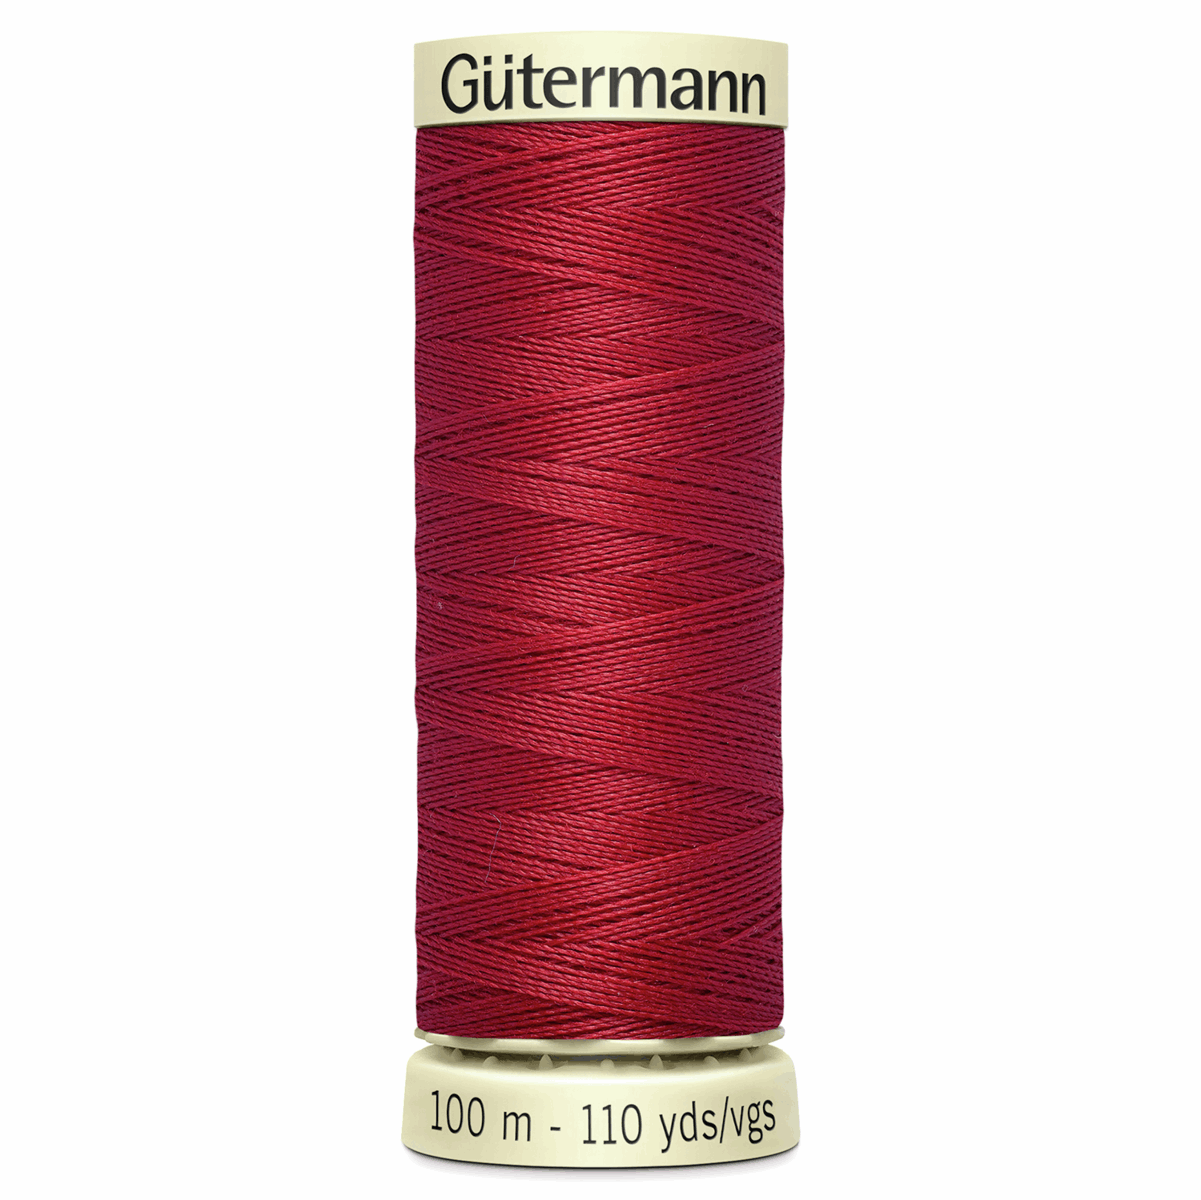 Gutermann Sew-All Thread 100m - Ruby Red (#046)